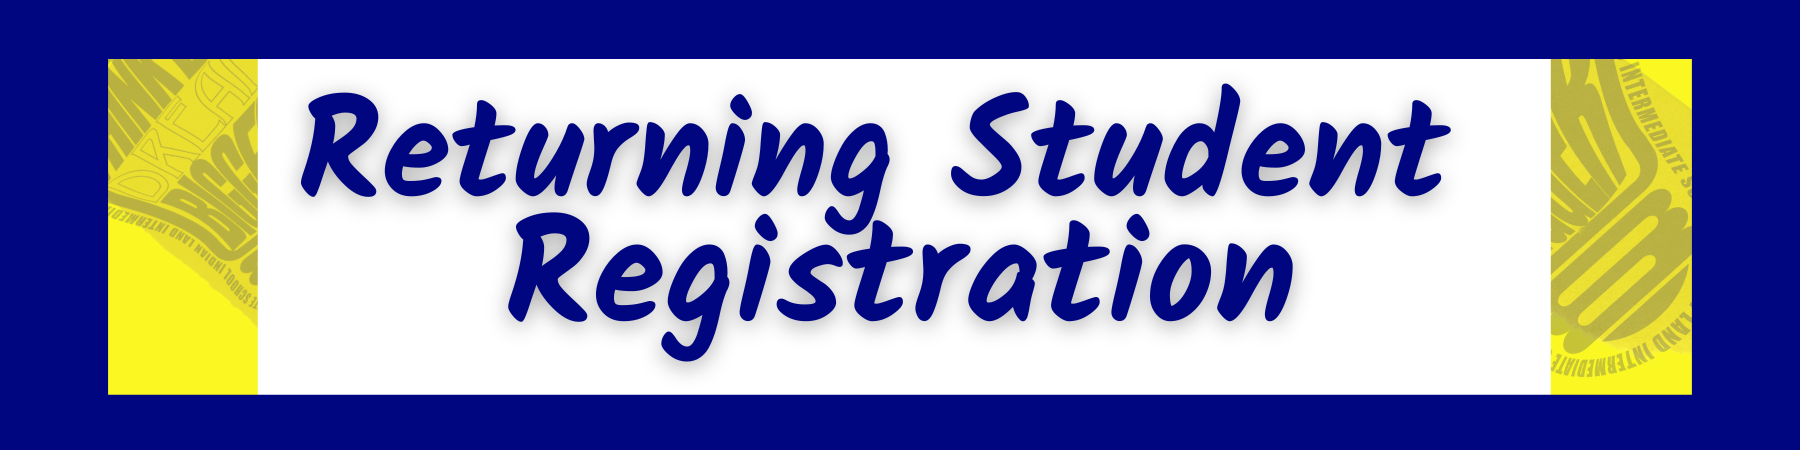 returning student registration